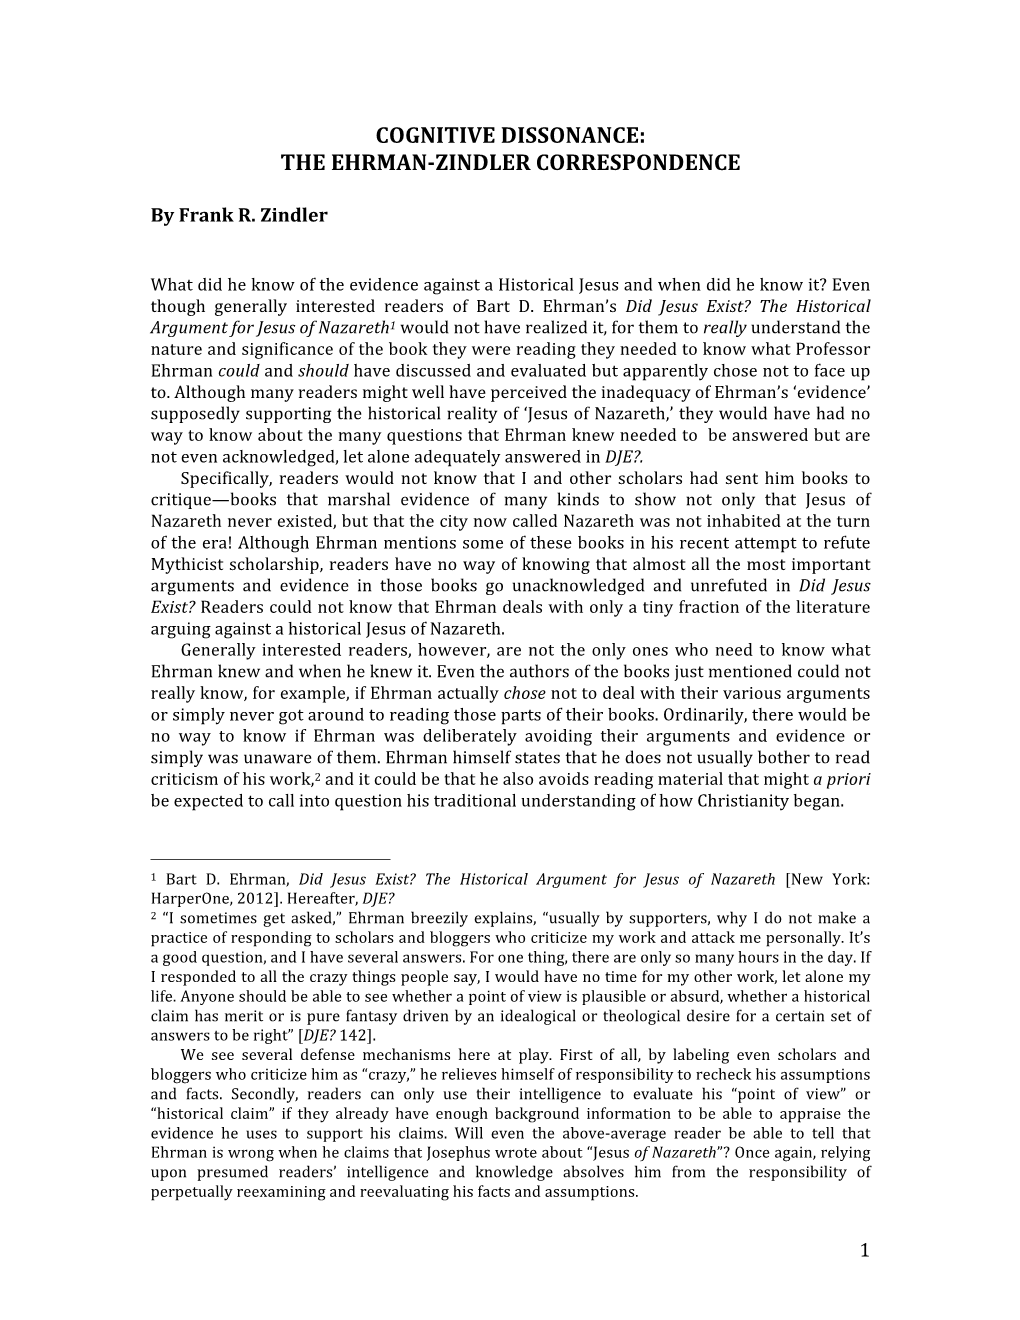 The Ehrman-Zindler Correspondence